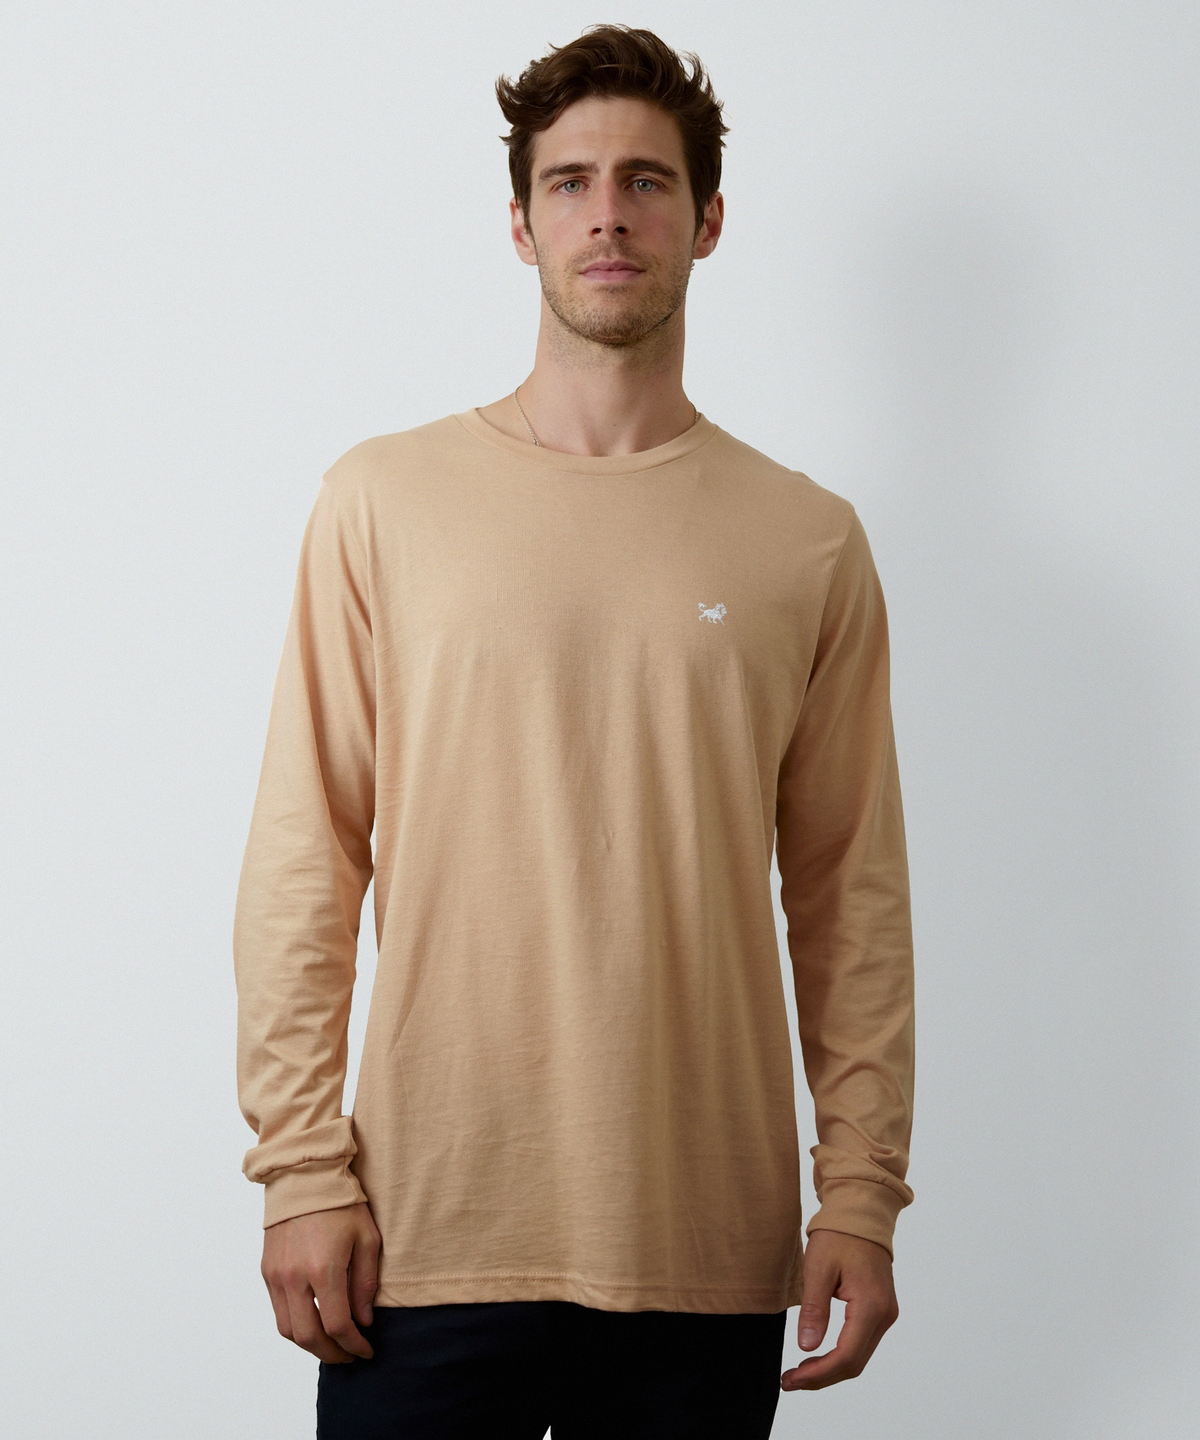 Signature Long Sleeve T-Shirt for Men (Sand Dune)